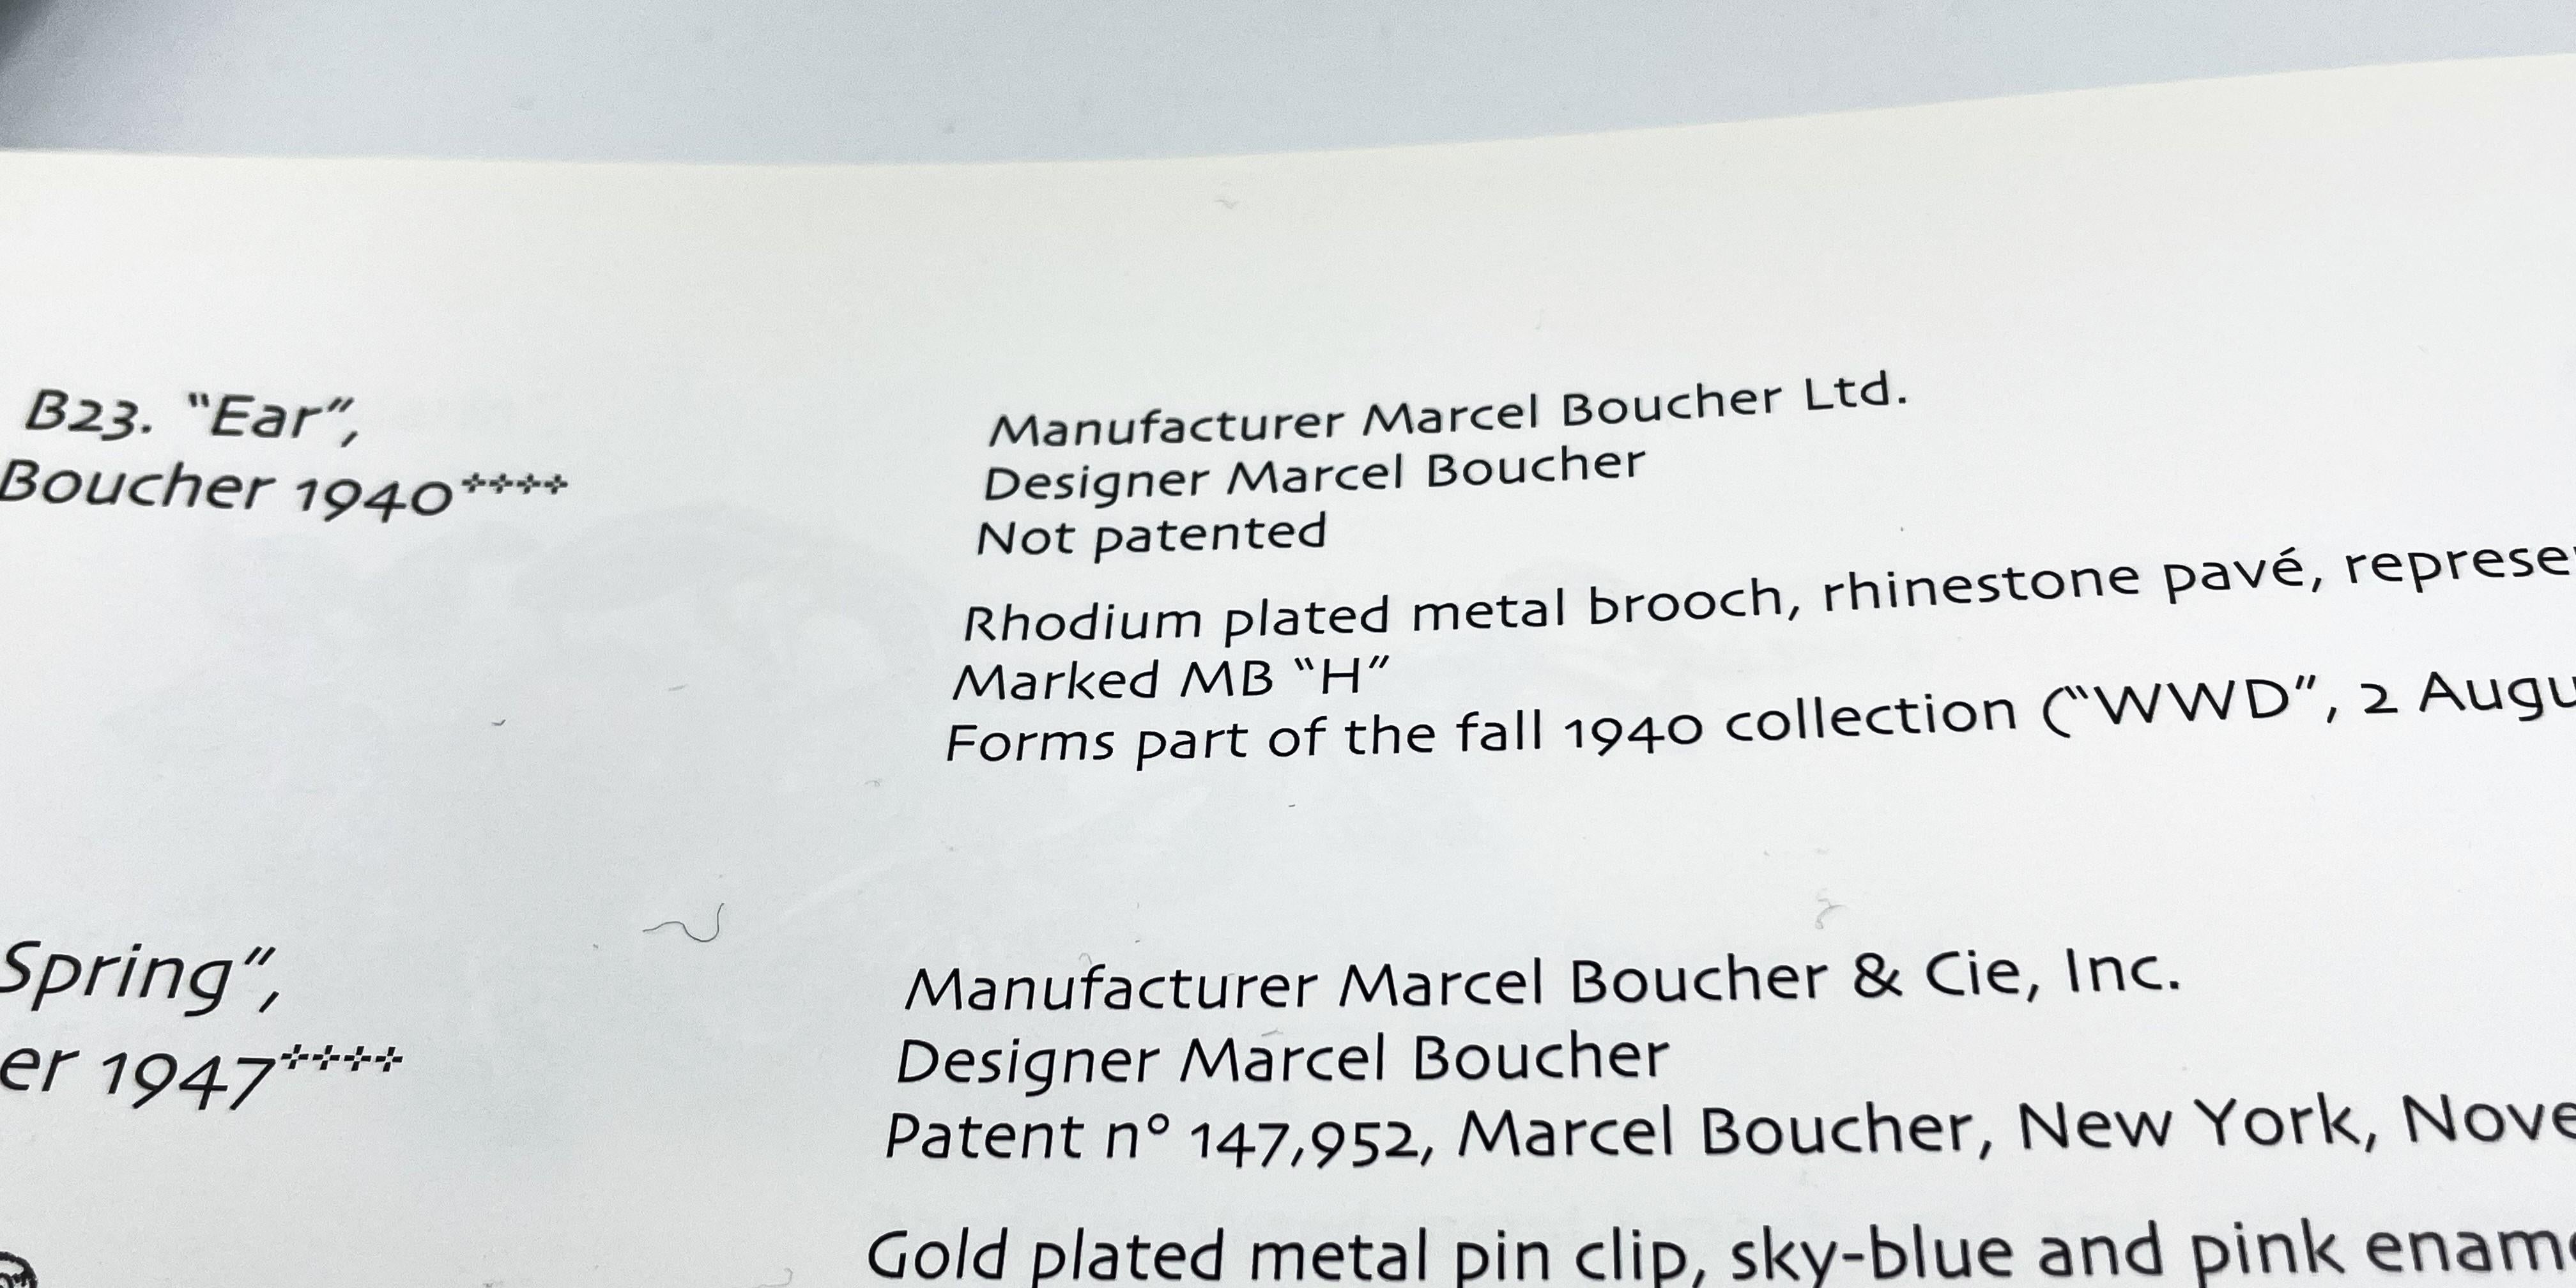 M. BOUCHER SHEAF-OF-WHEAT BROOCH, Rhodium plated, rhinestones pavé, 1940's USA For Sale 3